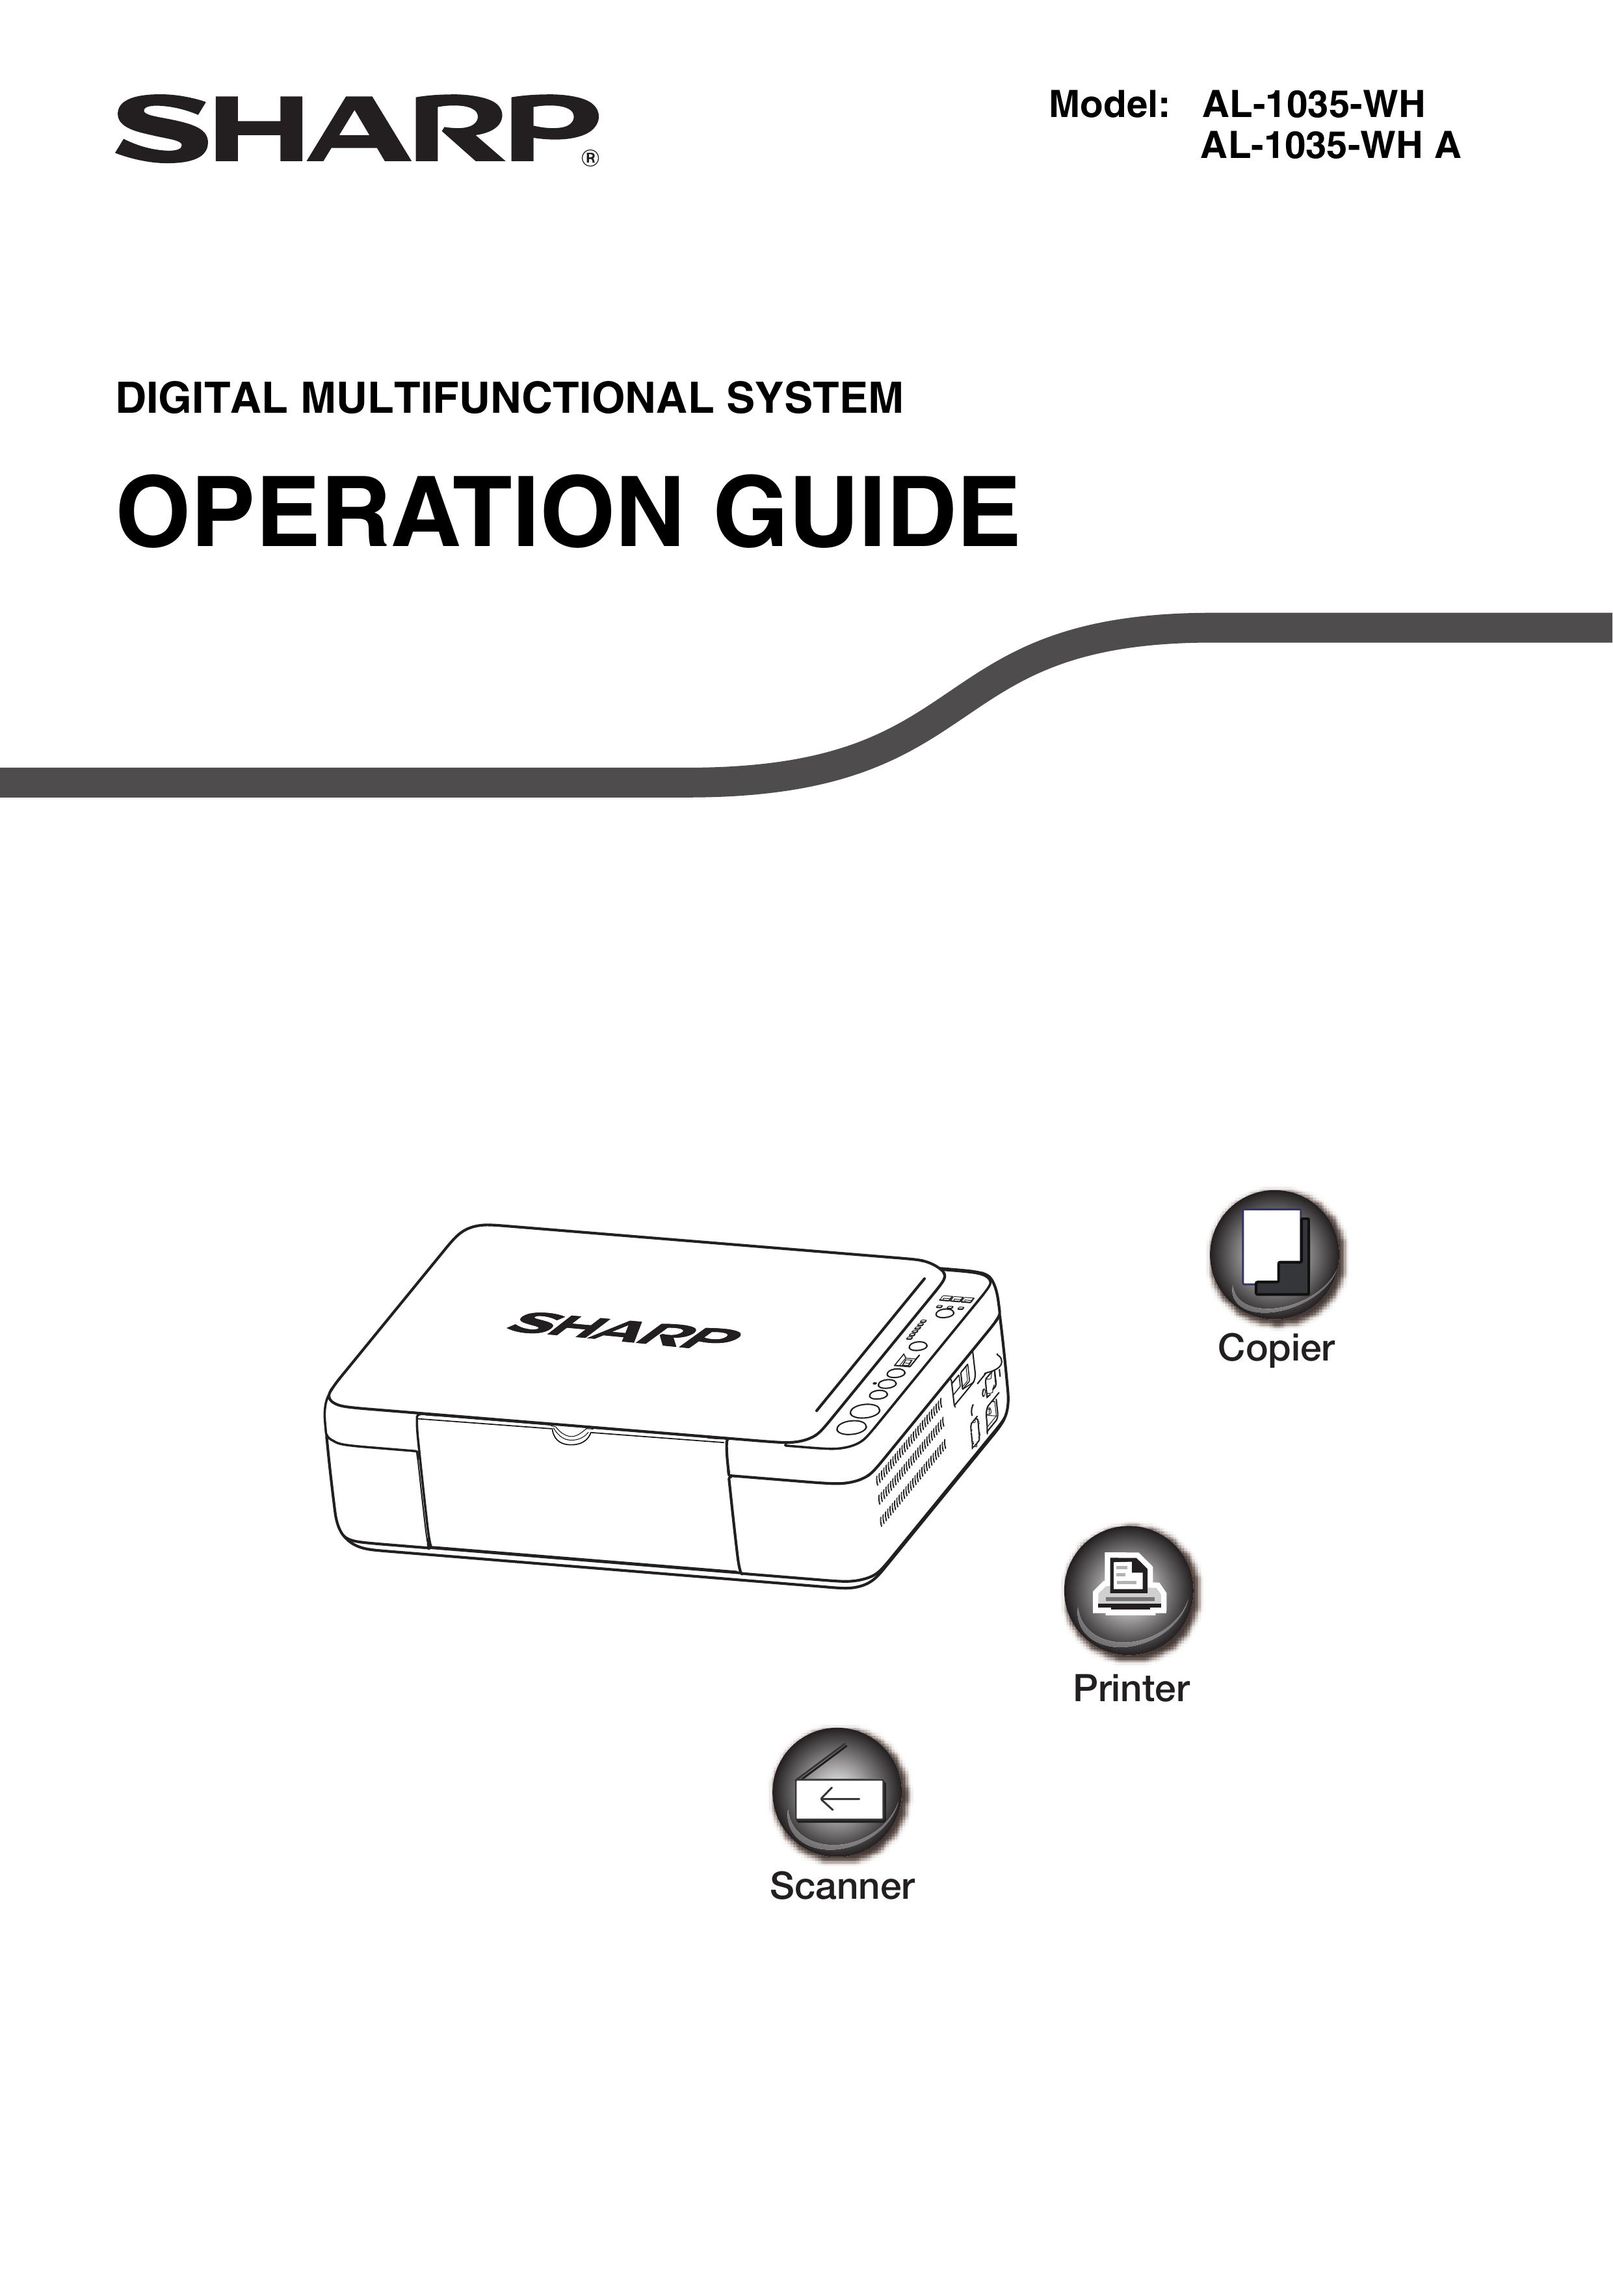 Sharp AL-1035-WH A Portable Multimedia Player User Manual